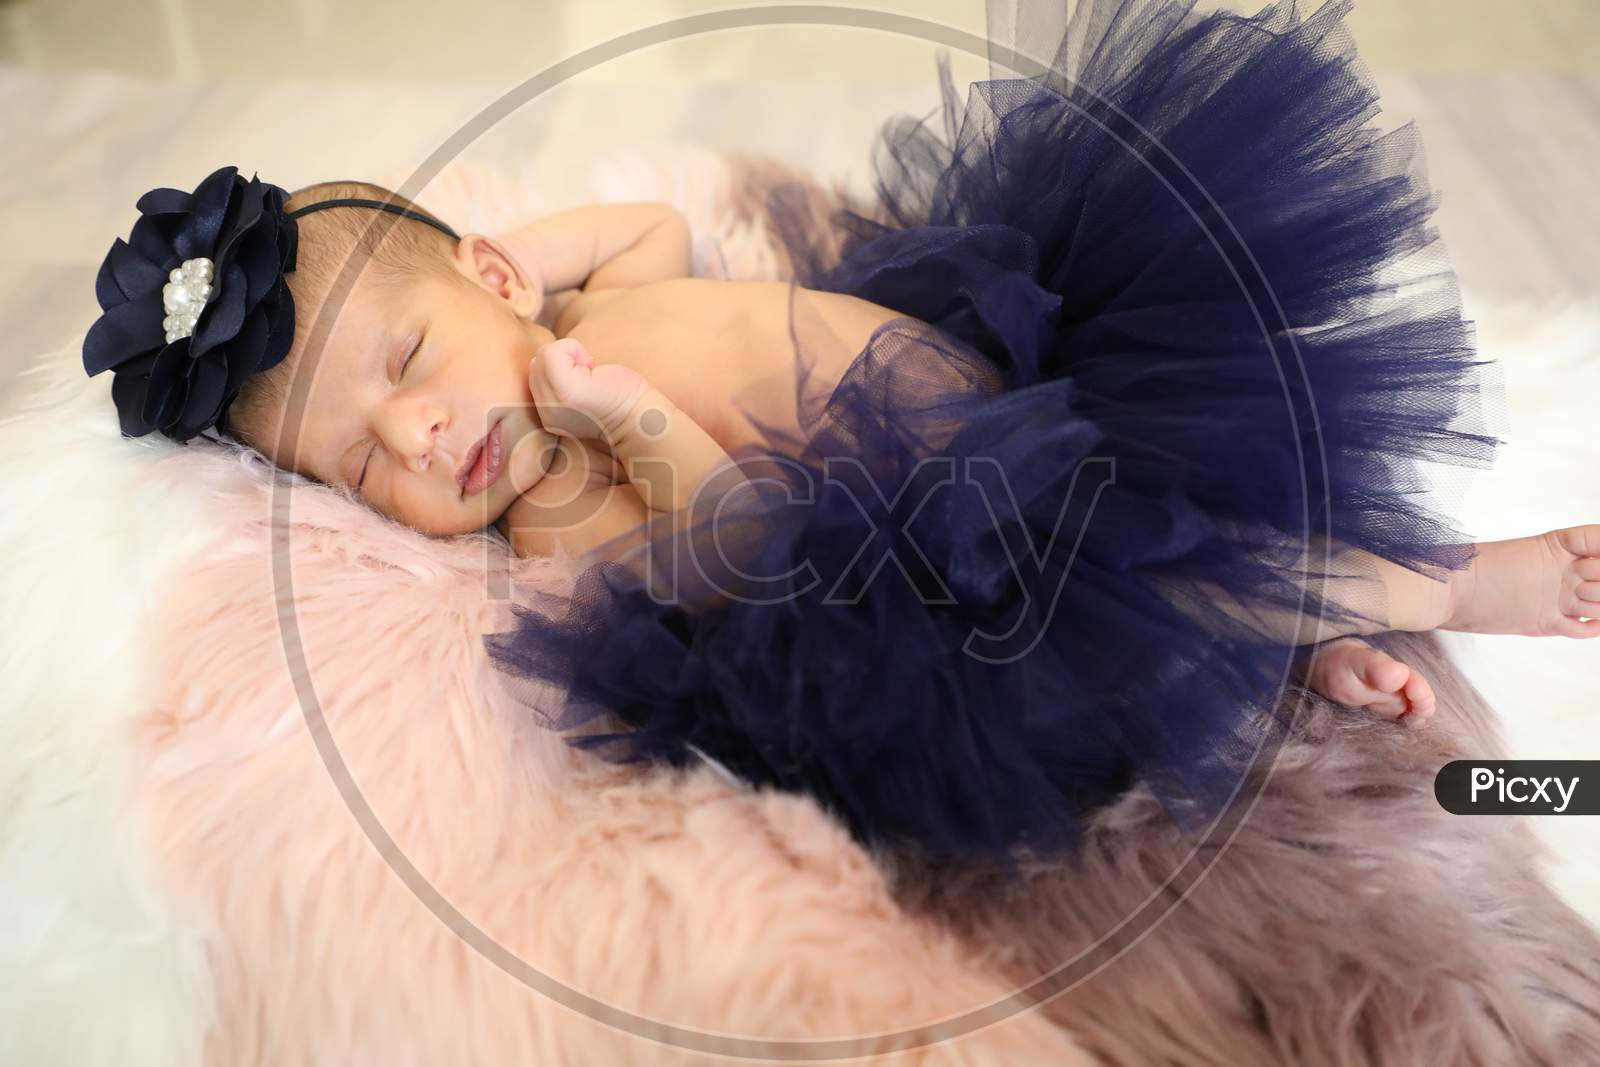 Little Pretty Girl With Beautiful Blue Frock Sleeping On Soft Wool